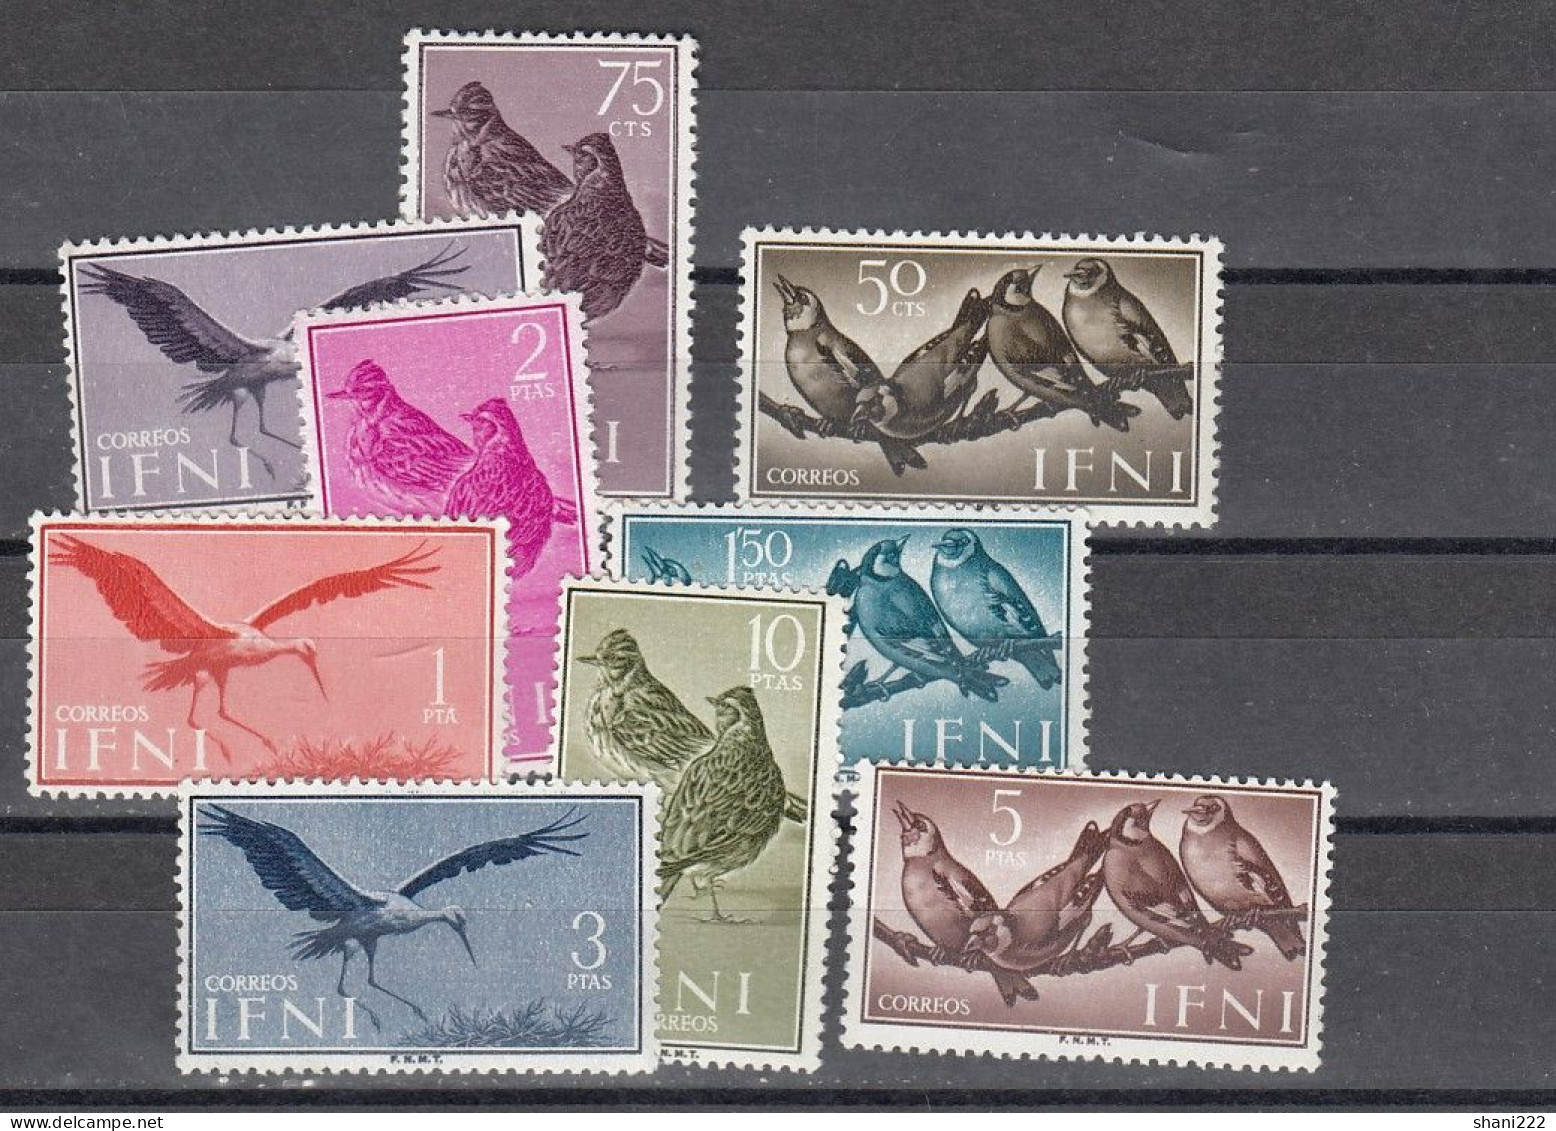 Ifni - 1960 Birds - MNH Set (e-828) - Ifni